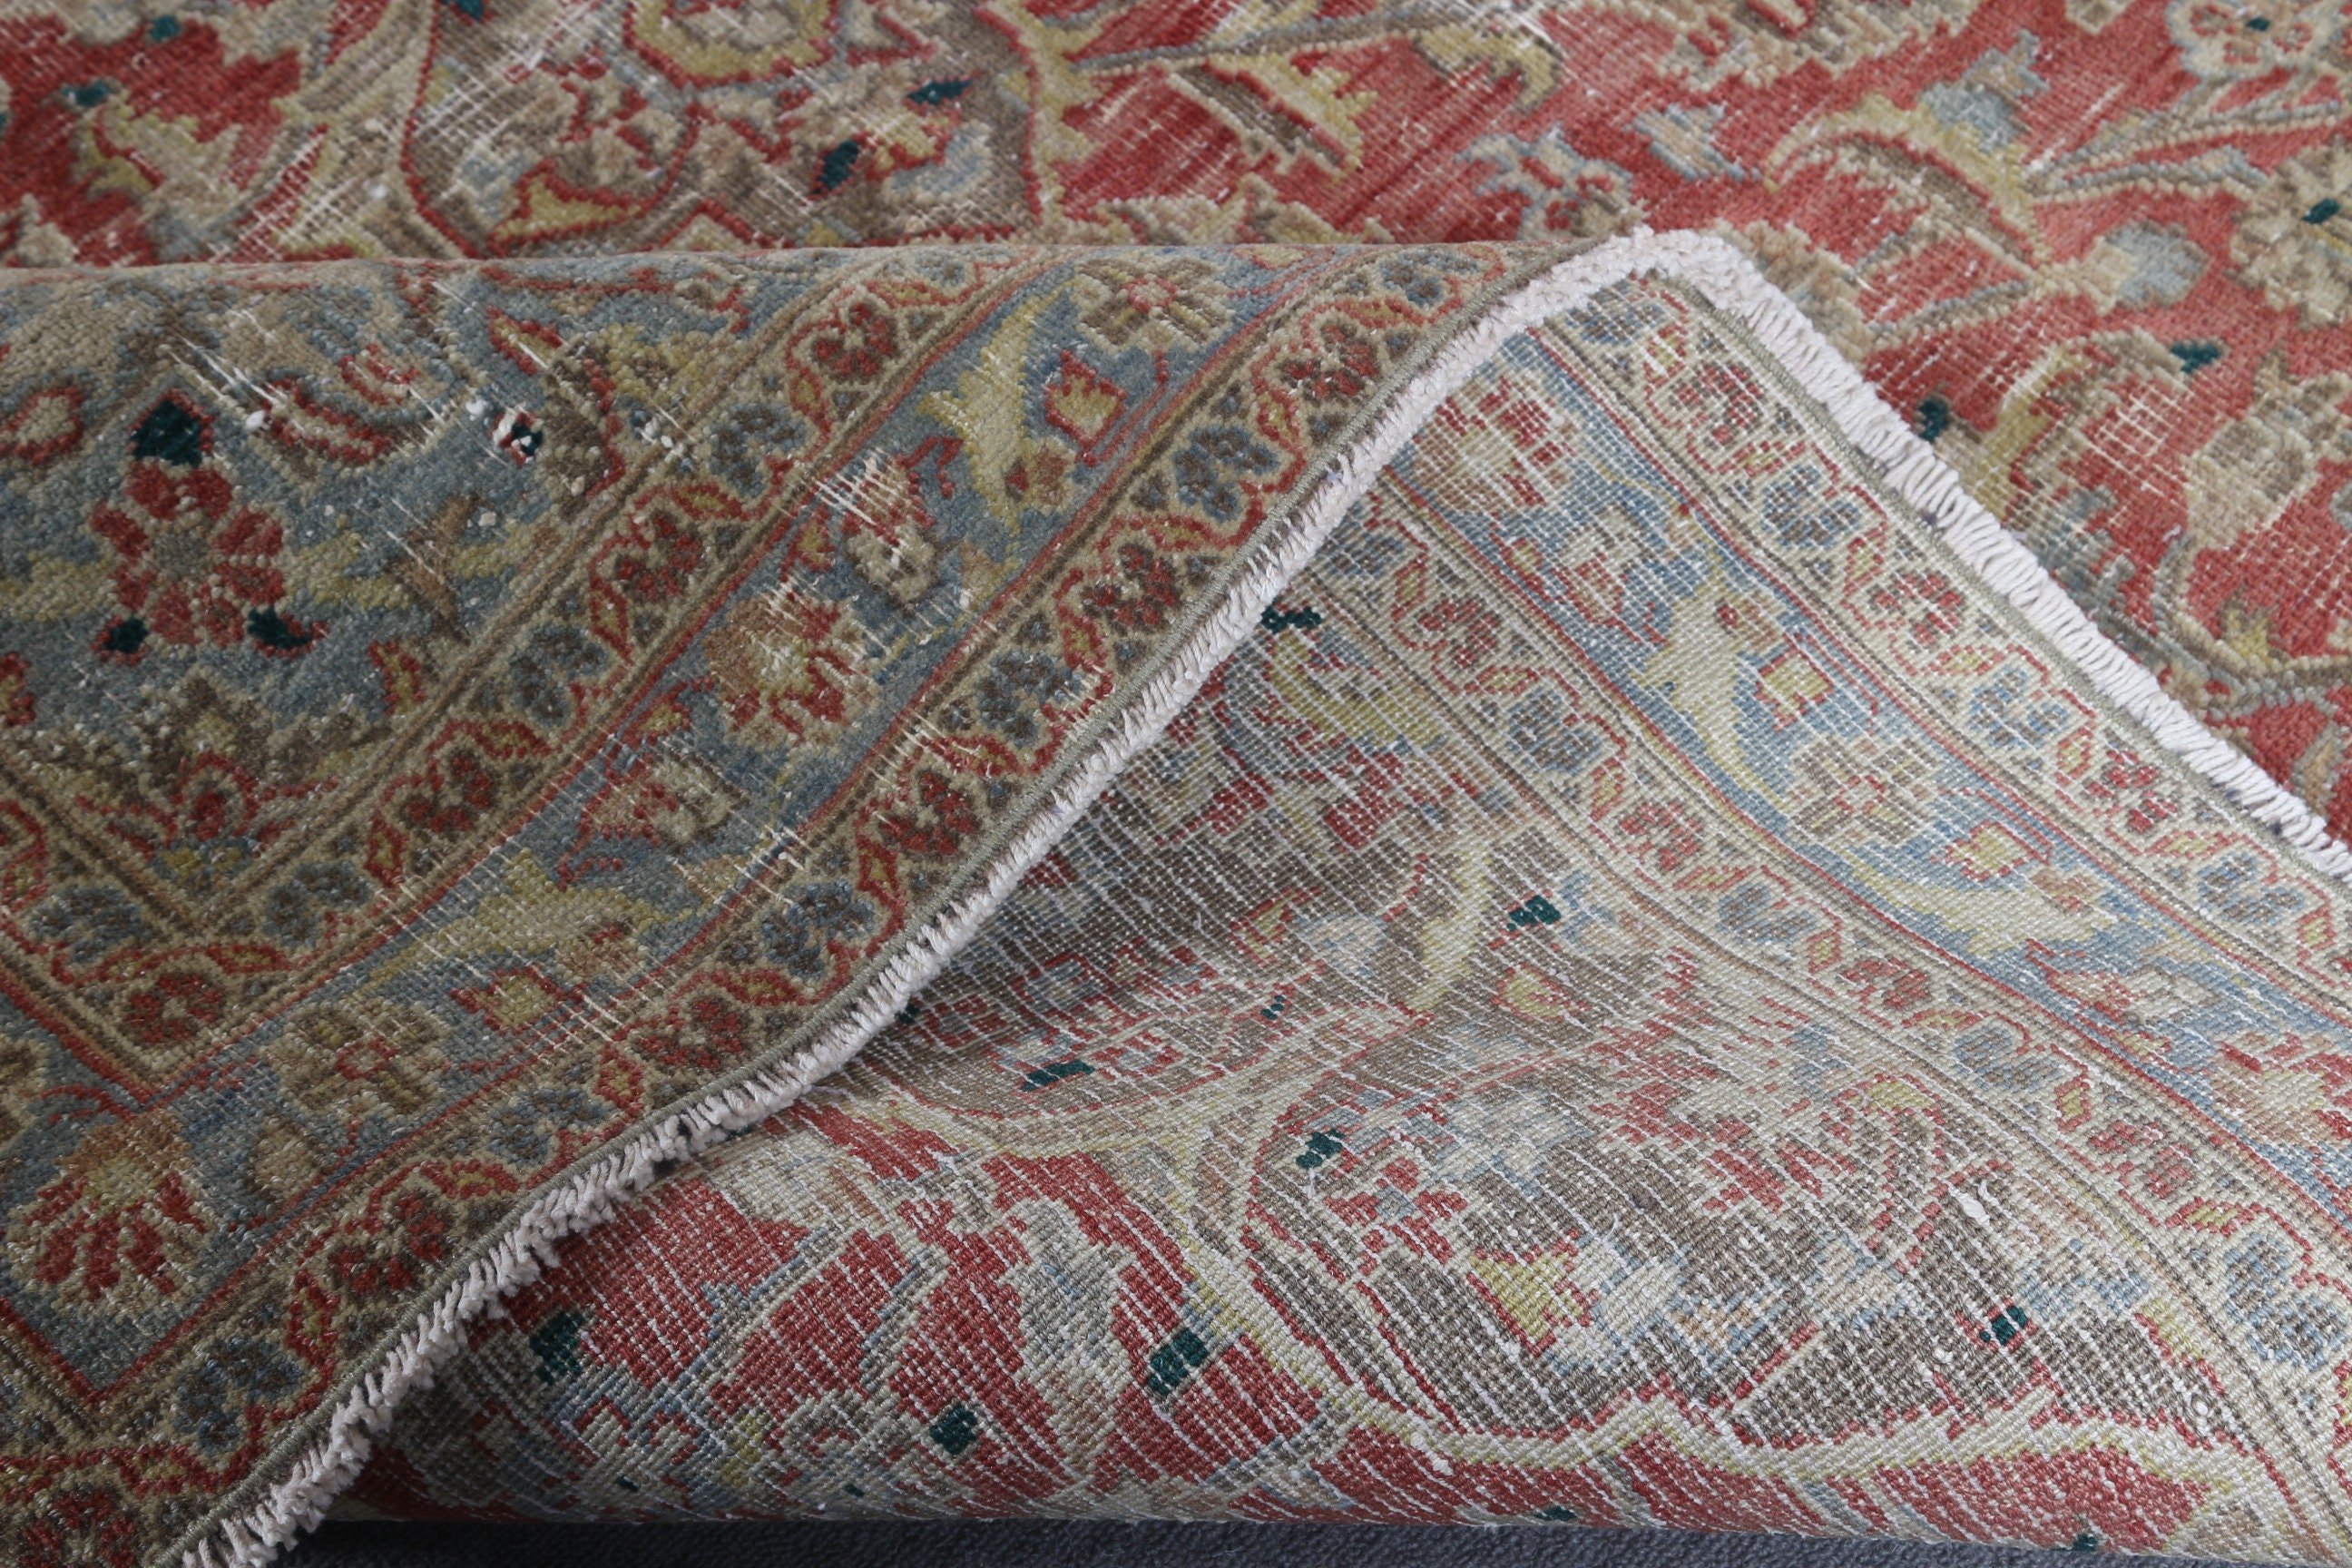 Antique Rug, Turkish Rug, Red Moroccan Rug, 6.8x9.5 ft Large Rugs, Rugs for Salon, Wool Rug, Vintage Rug, Living Room Rug, Bedroom Rug